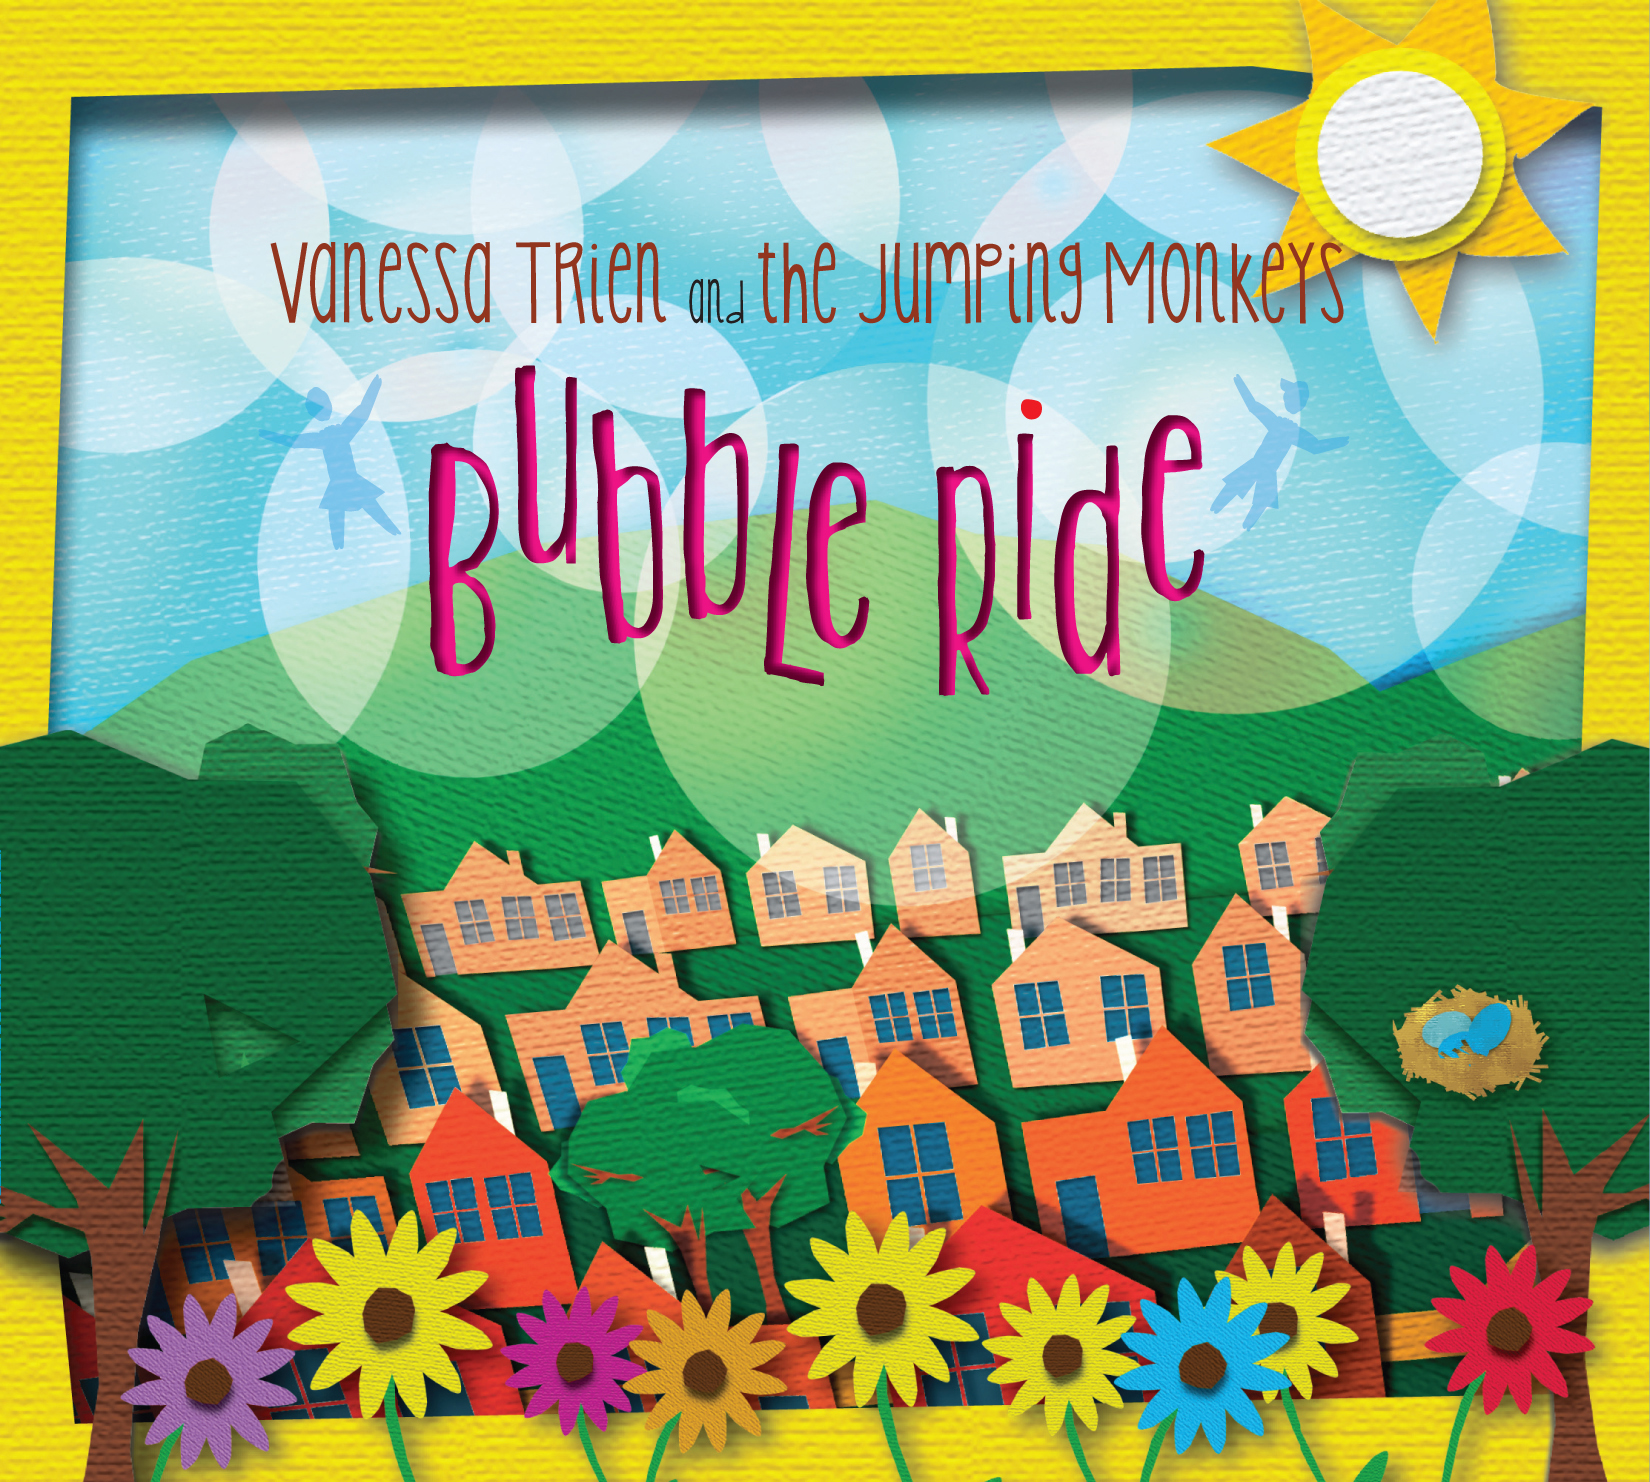 CD Reviews: Bubble Ride